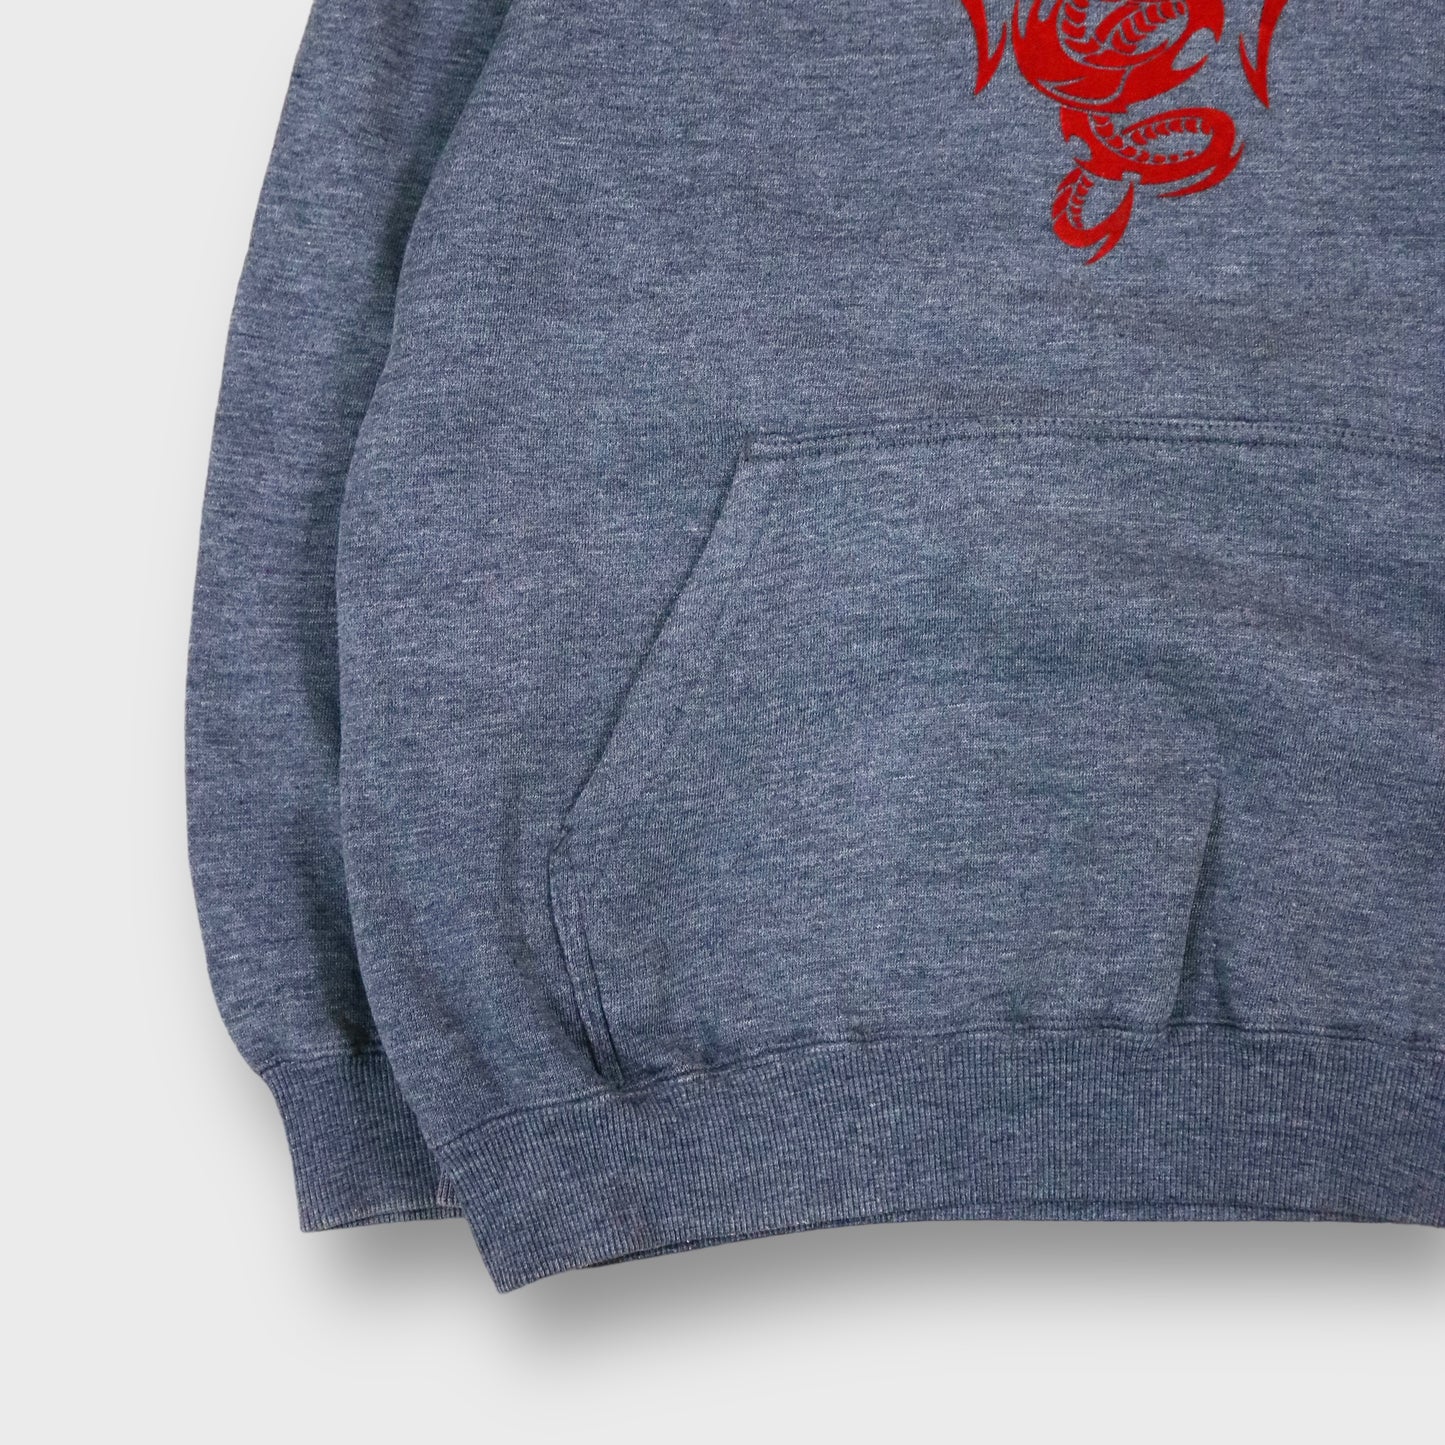 "JNCO" Tribal dragon design hoodie